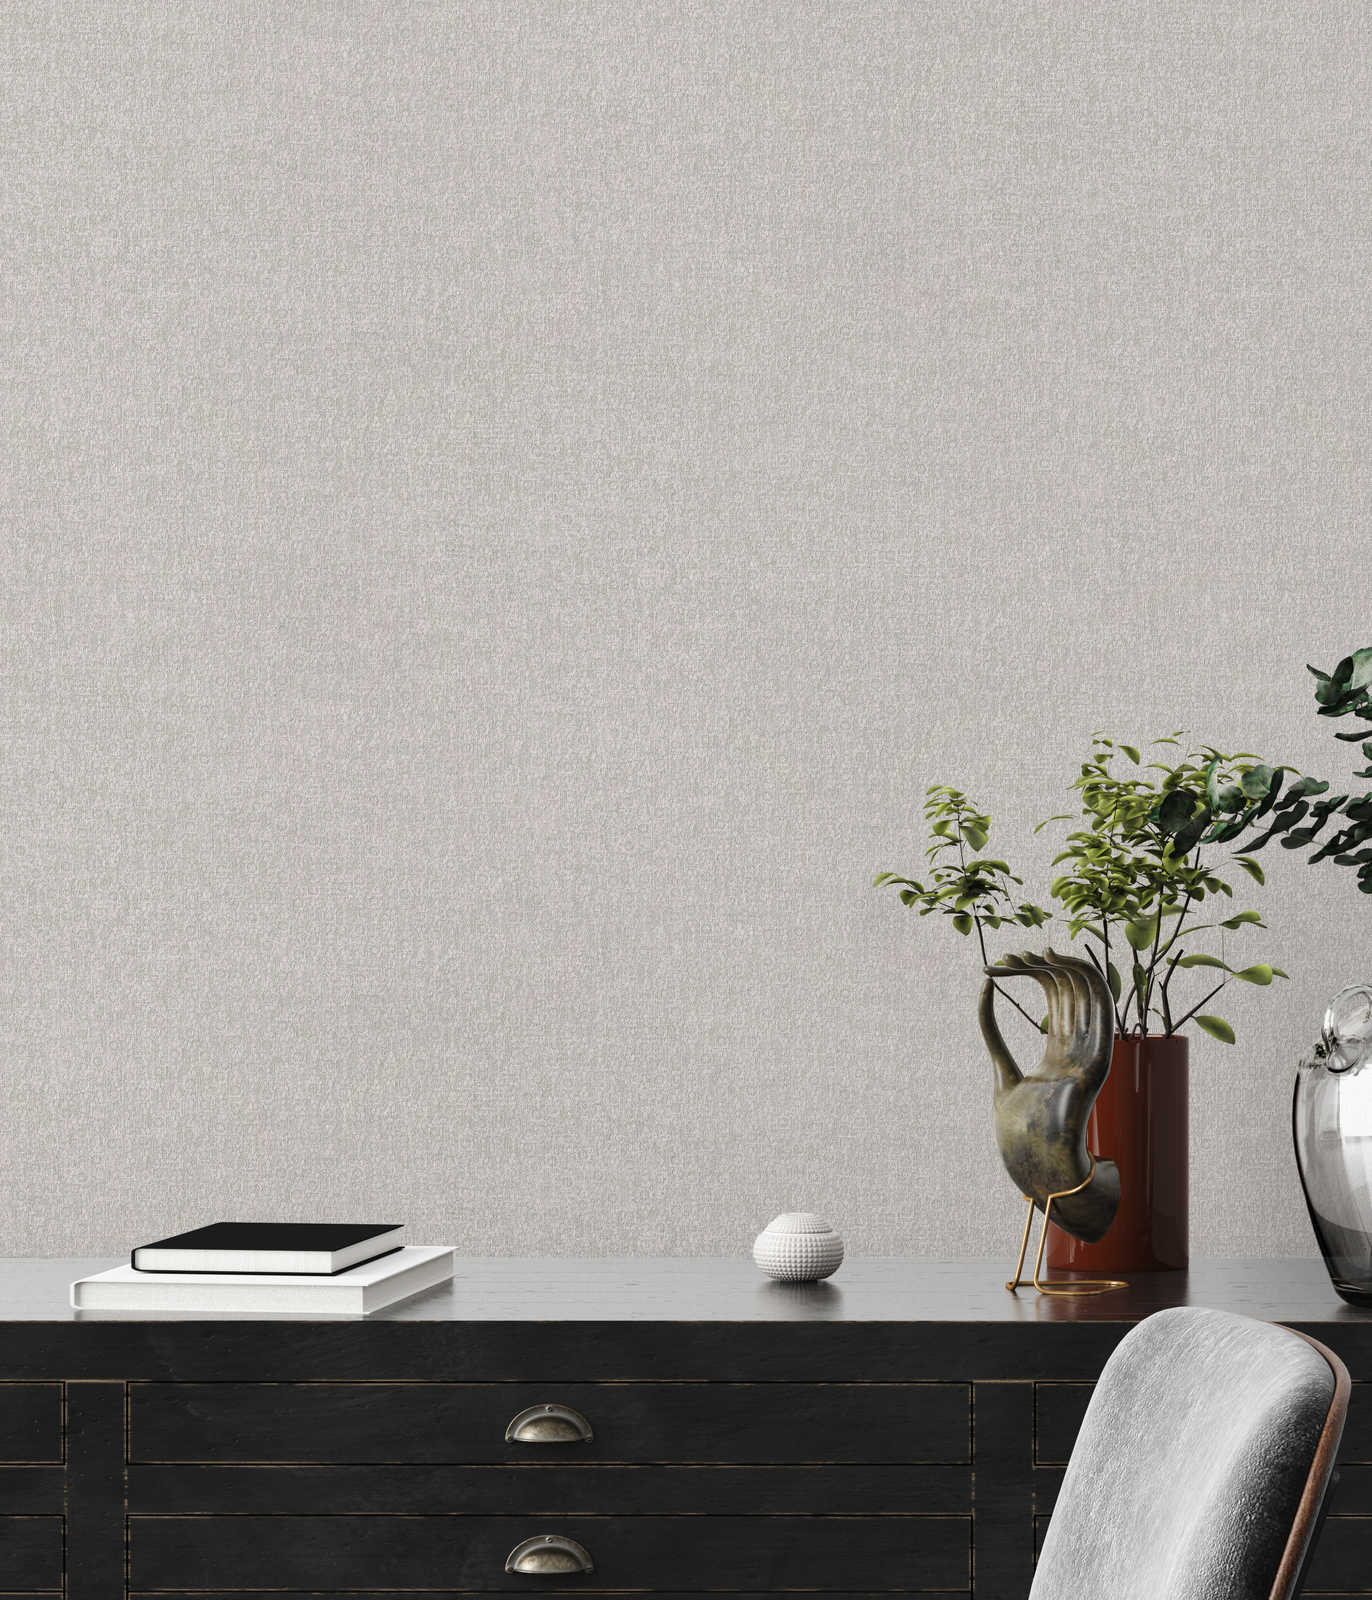             Beige non-woven wallpaper with textured pattern & metallic sheen
        